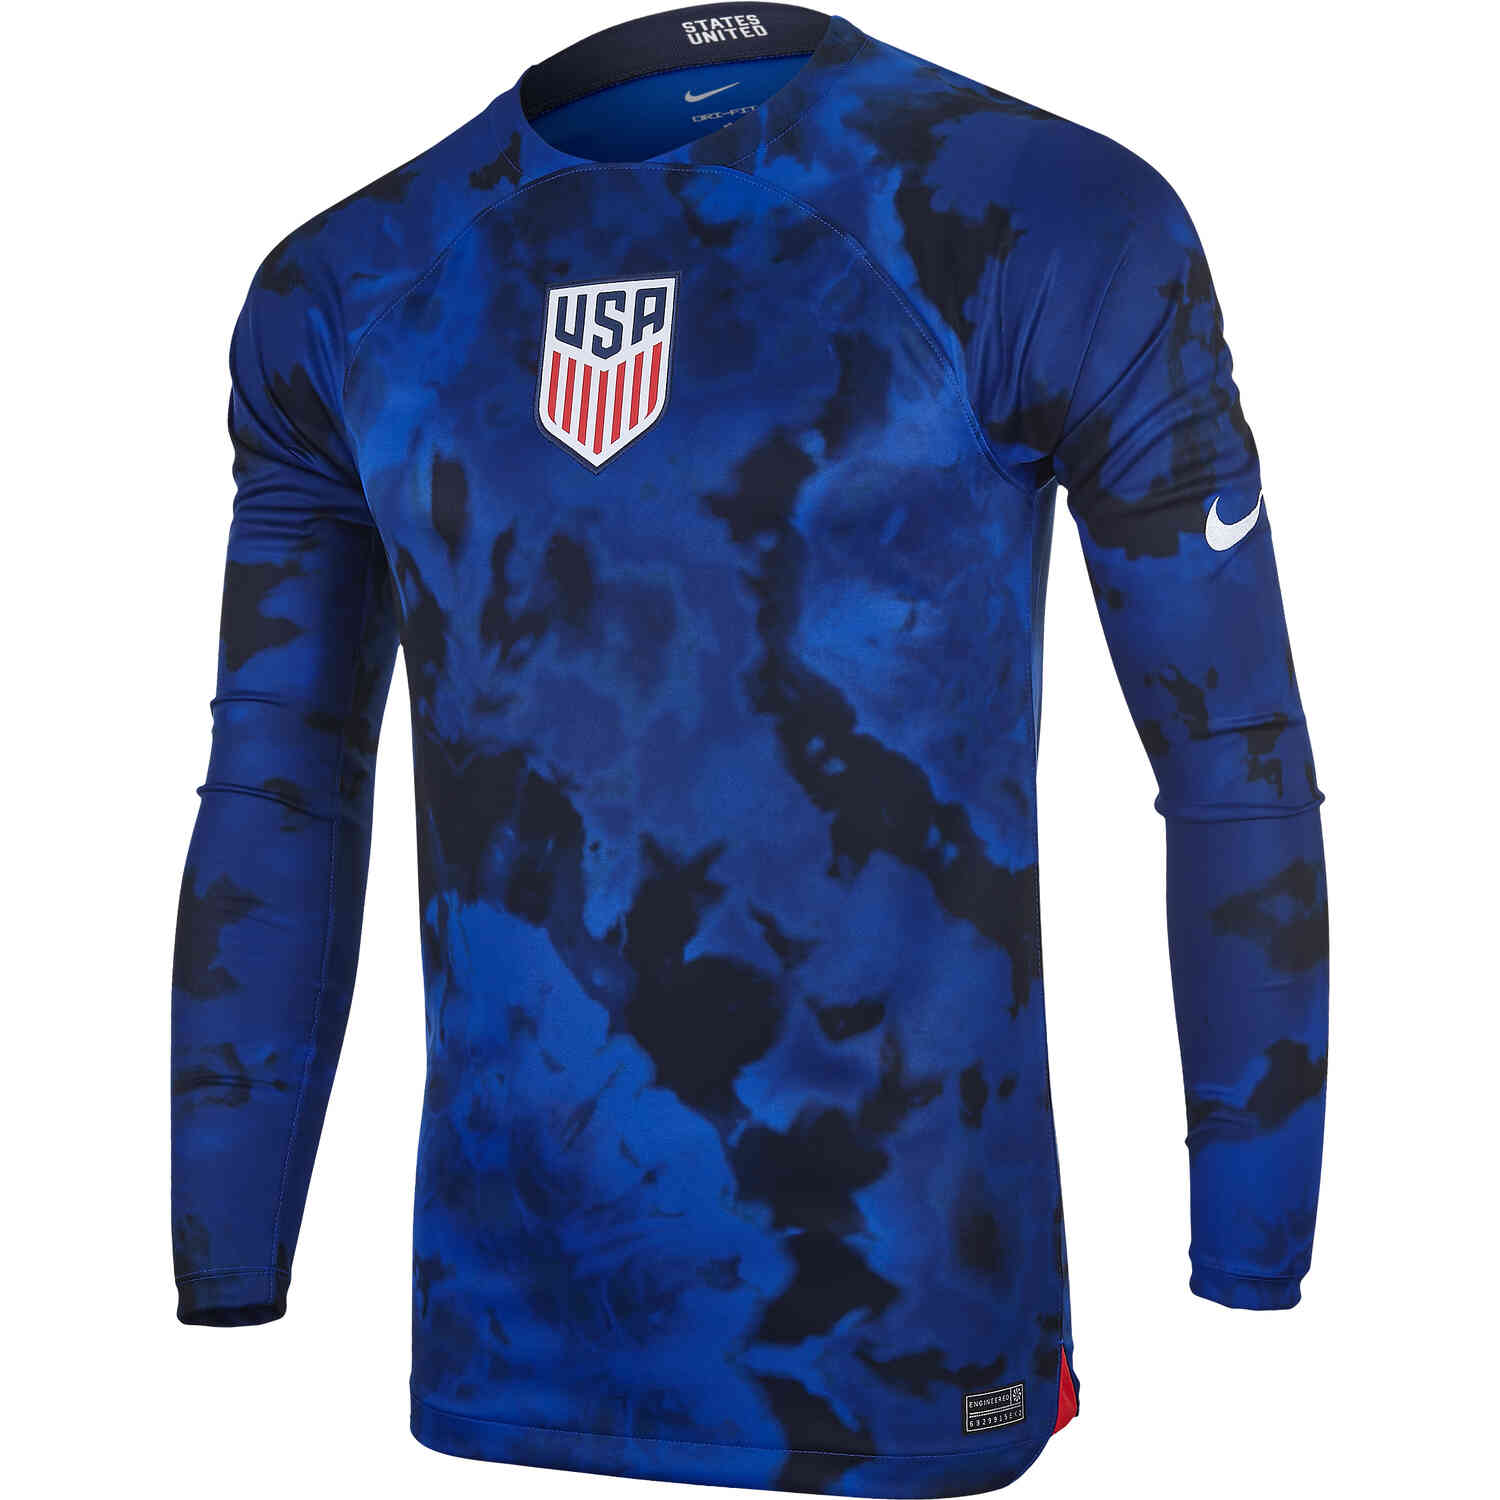 Nike Men's USA 2021/22 Dri-Fit ADV Away Match Jersey Blue/Red, S